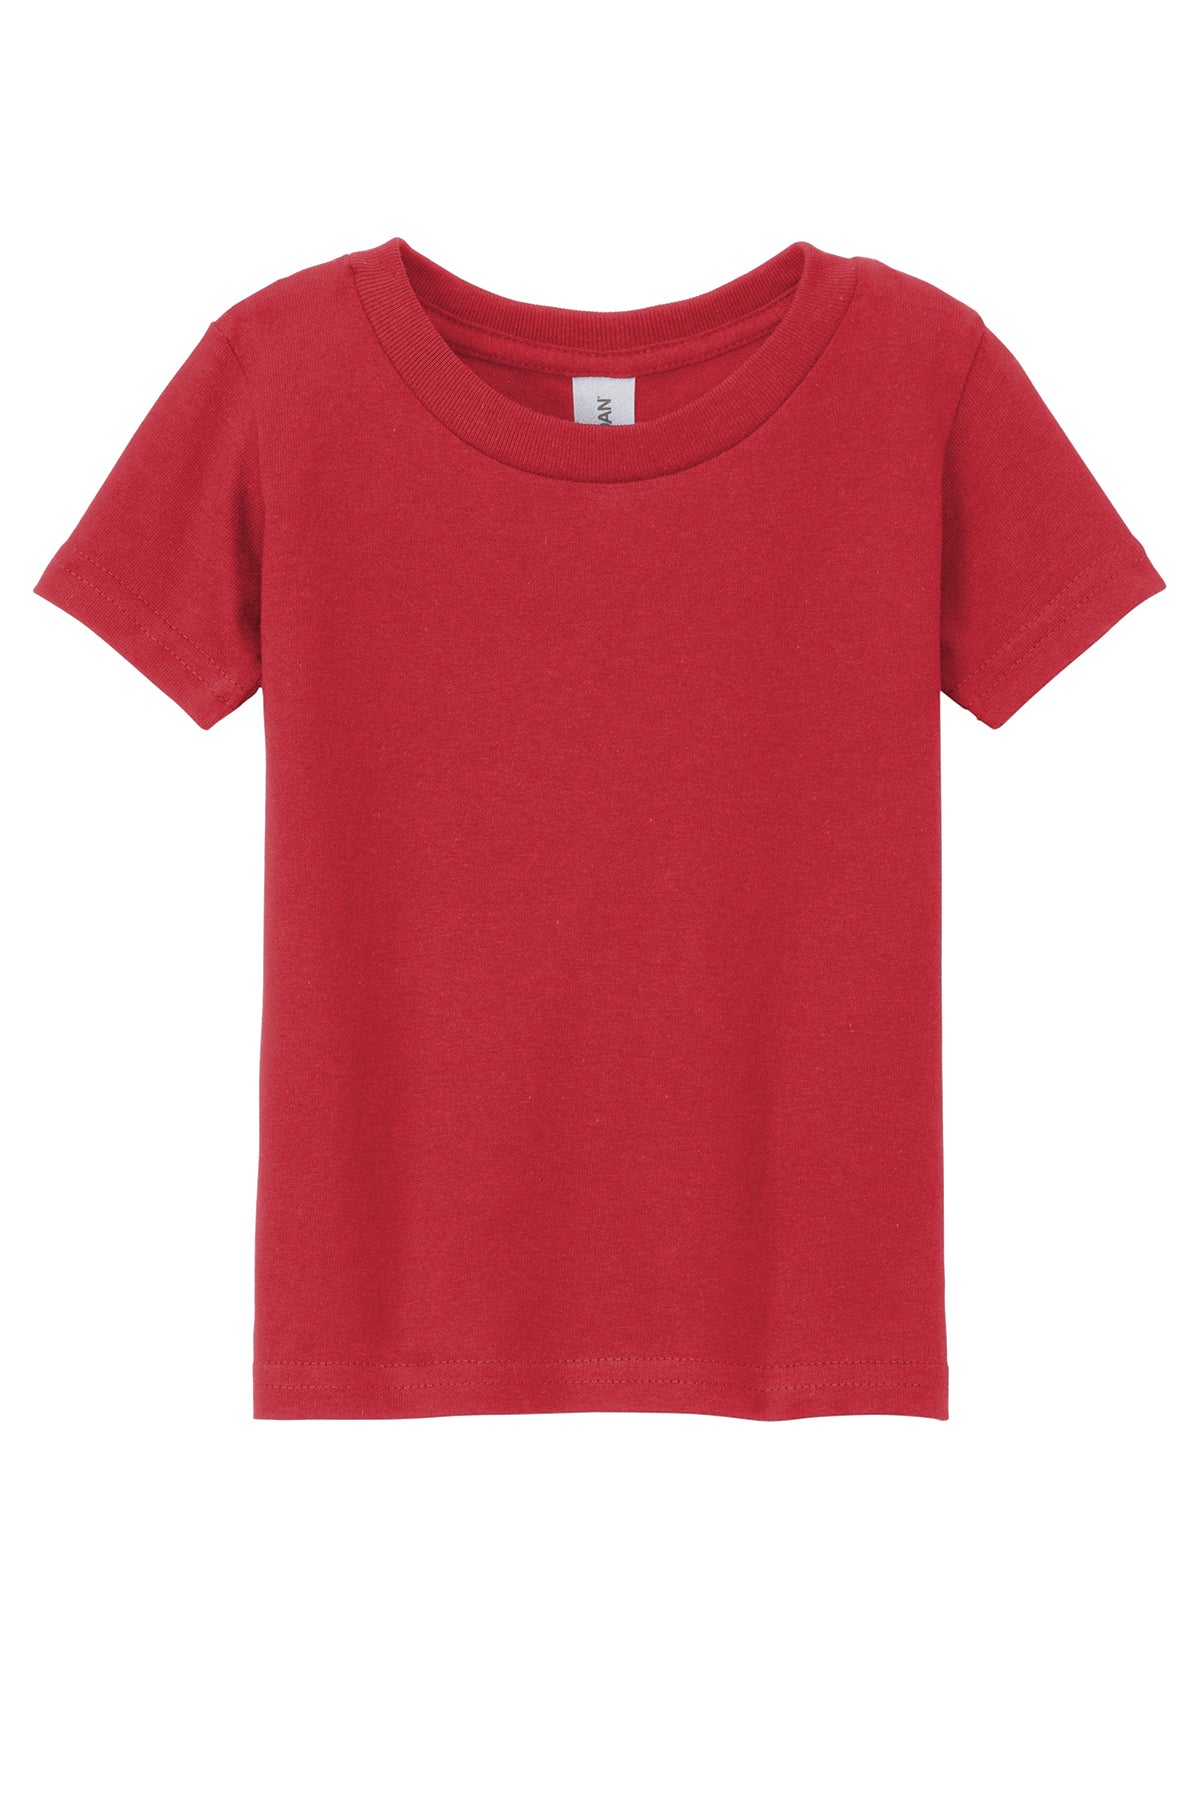 Gildan Toddler 100% Cotton Short Sleeve Shirts Red